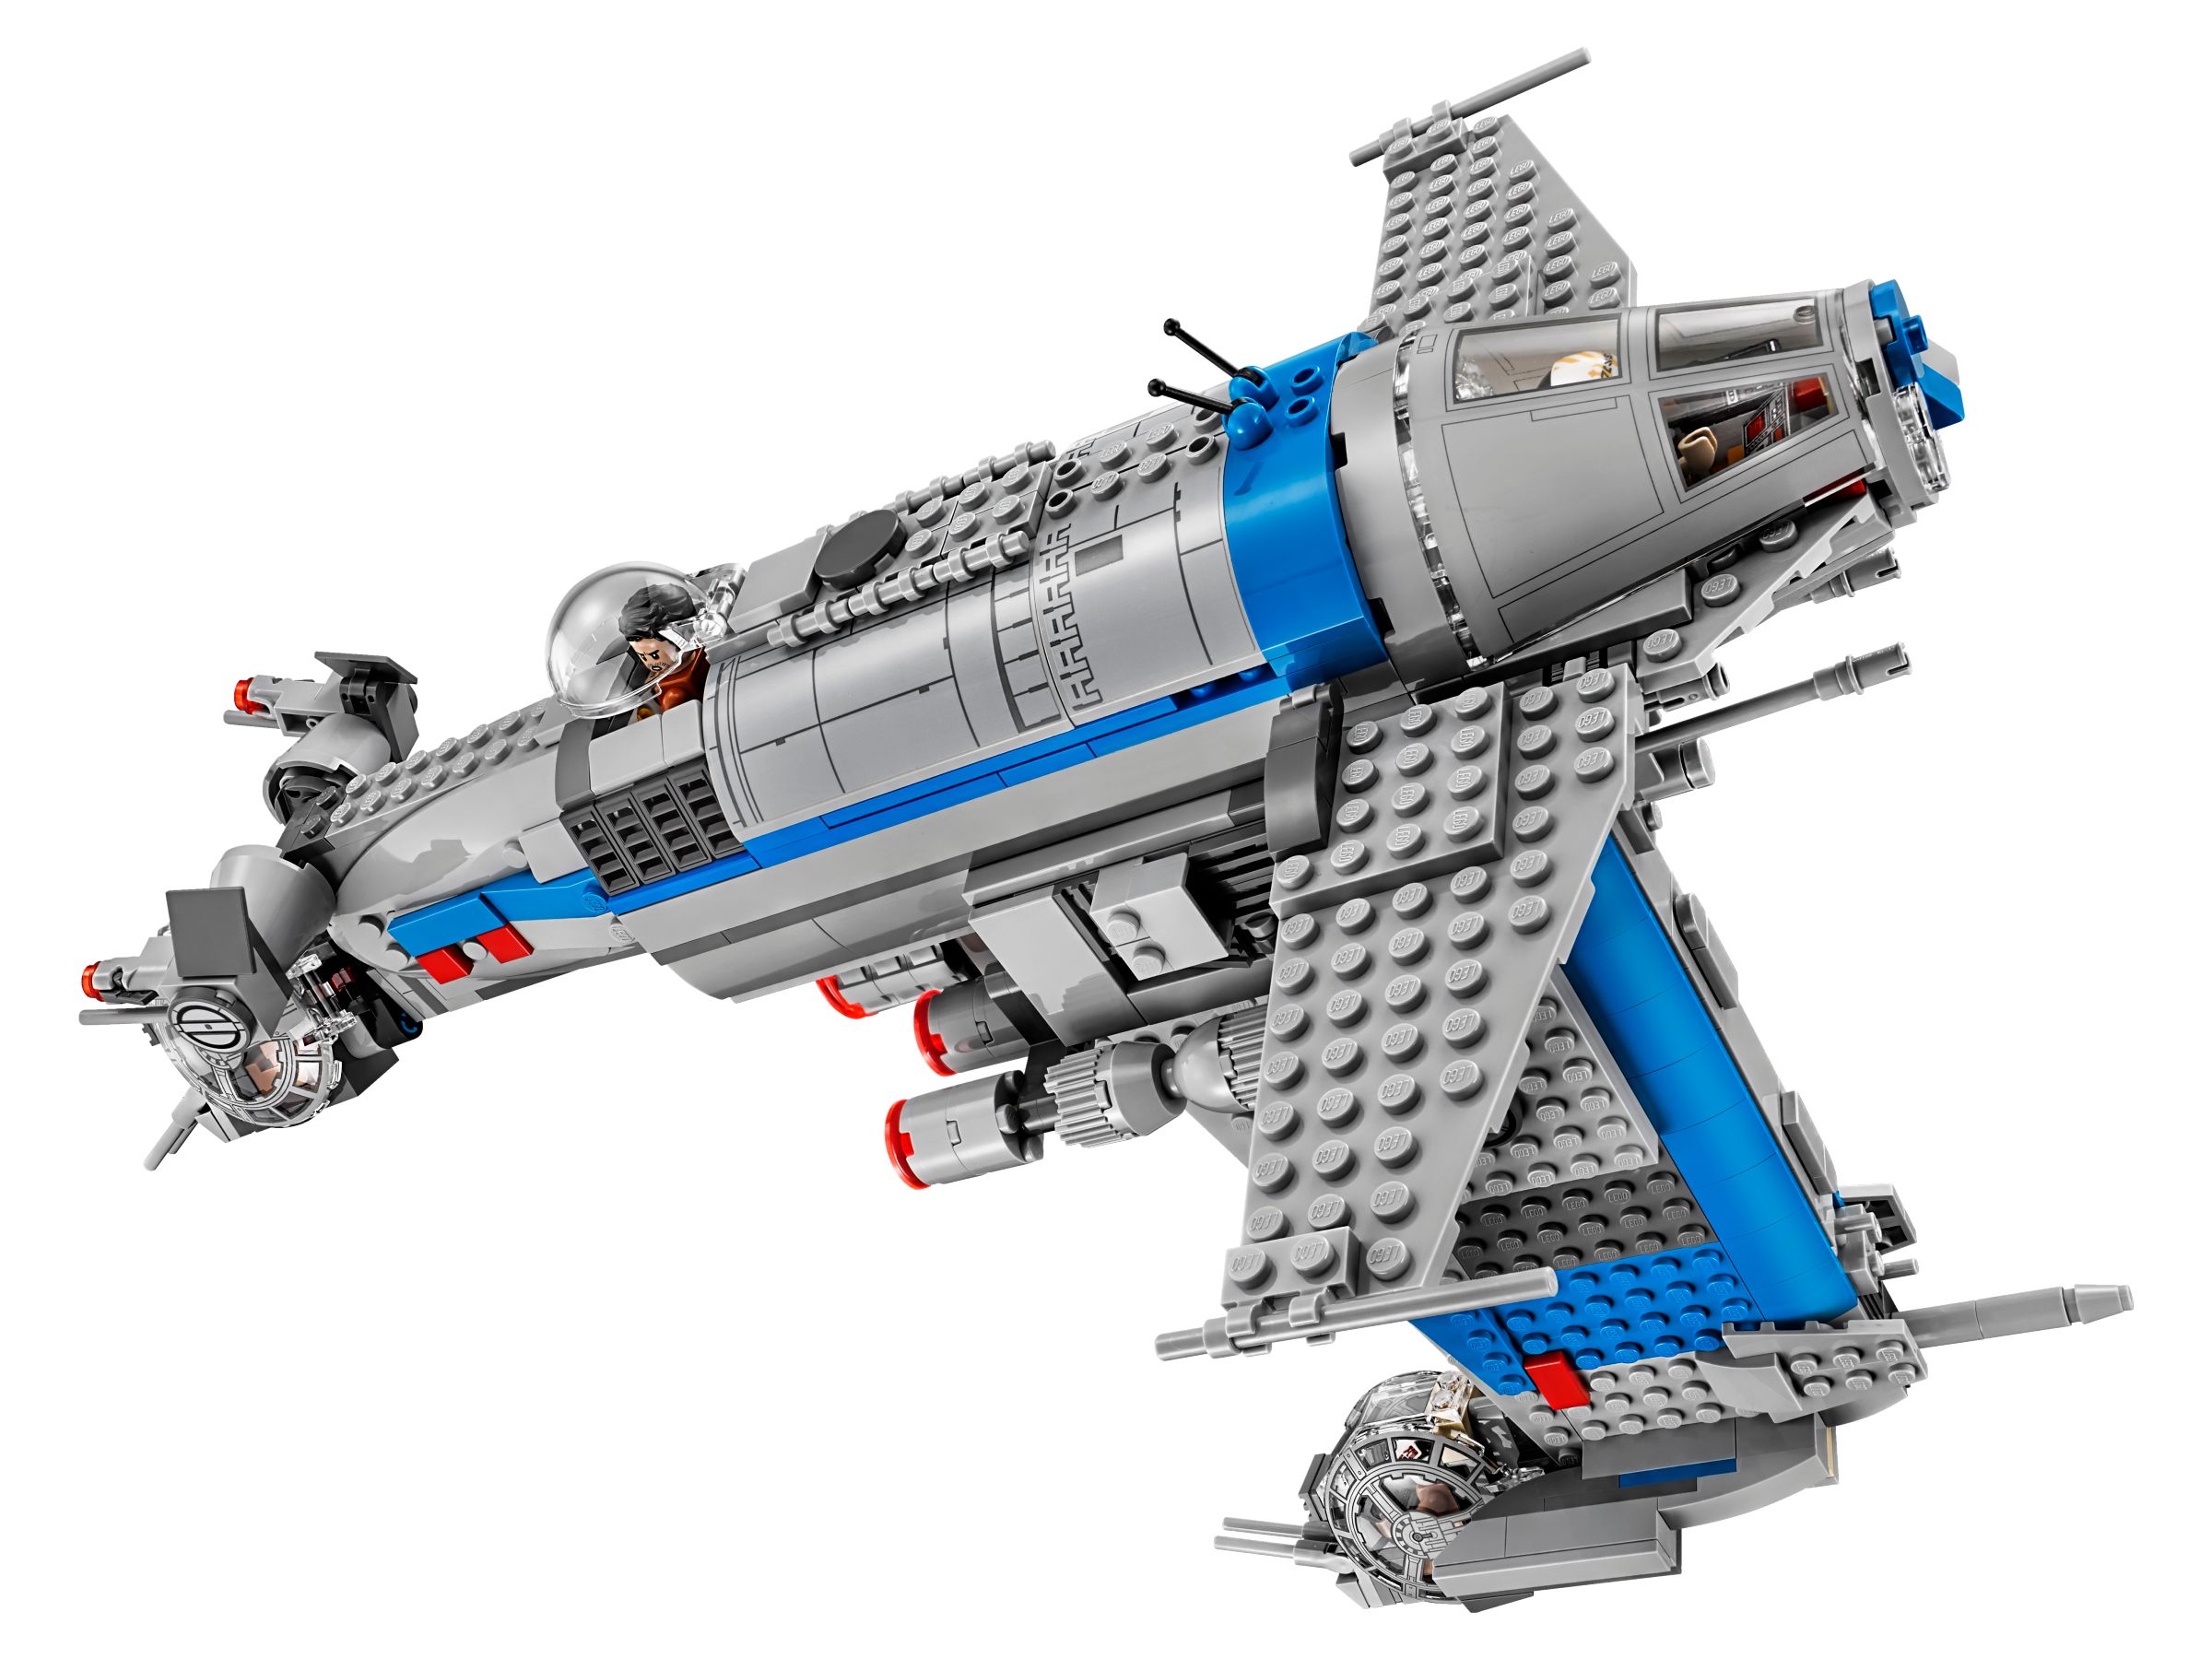 LEGO Star Wars 75188 Resistance Bomber LEGO_75188_alt2.jpg